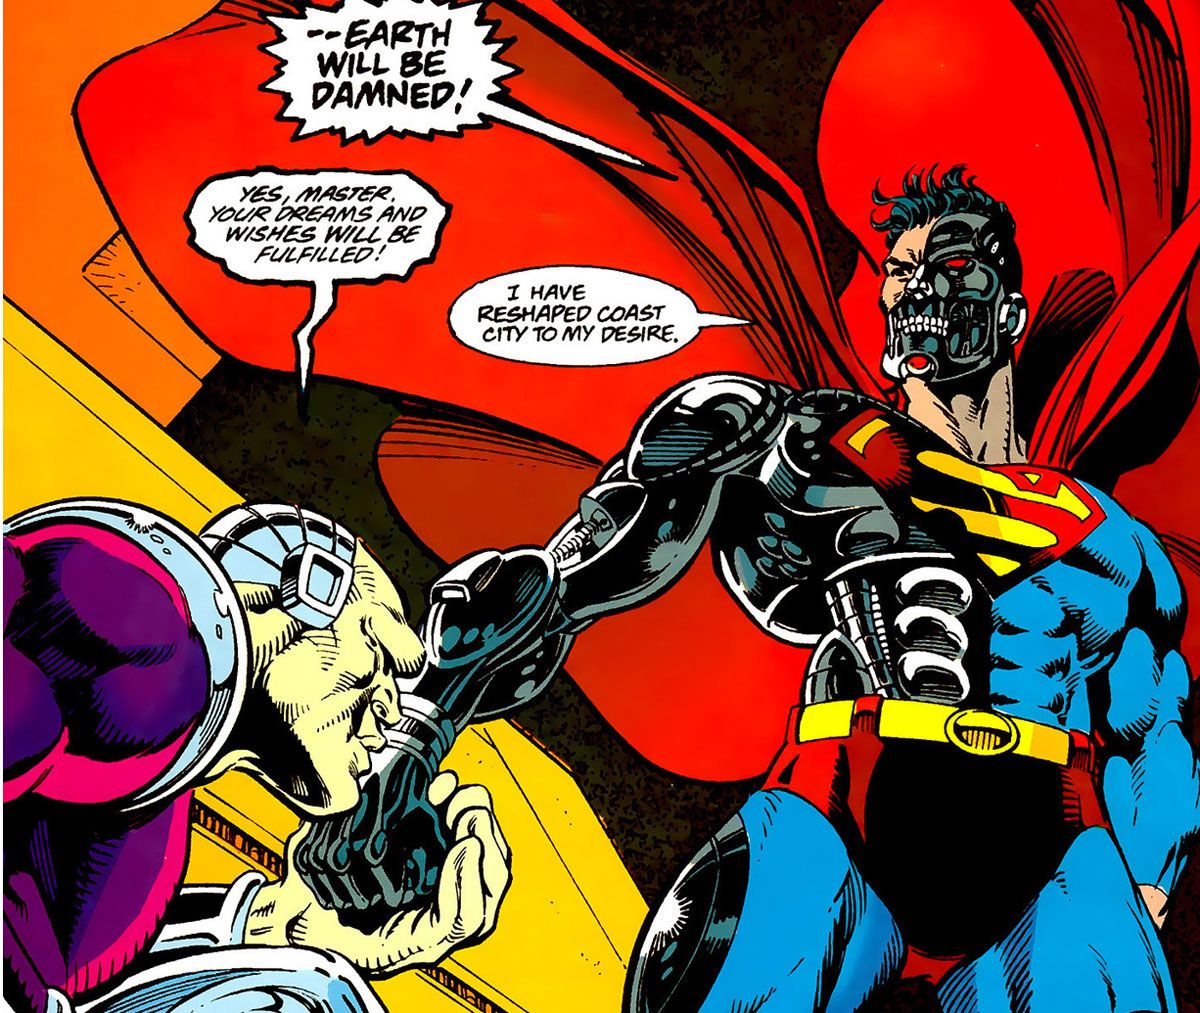 As Cyborg Superman, Hank Henshaw wreaked havoc on the DC Universe